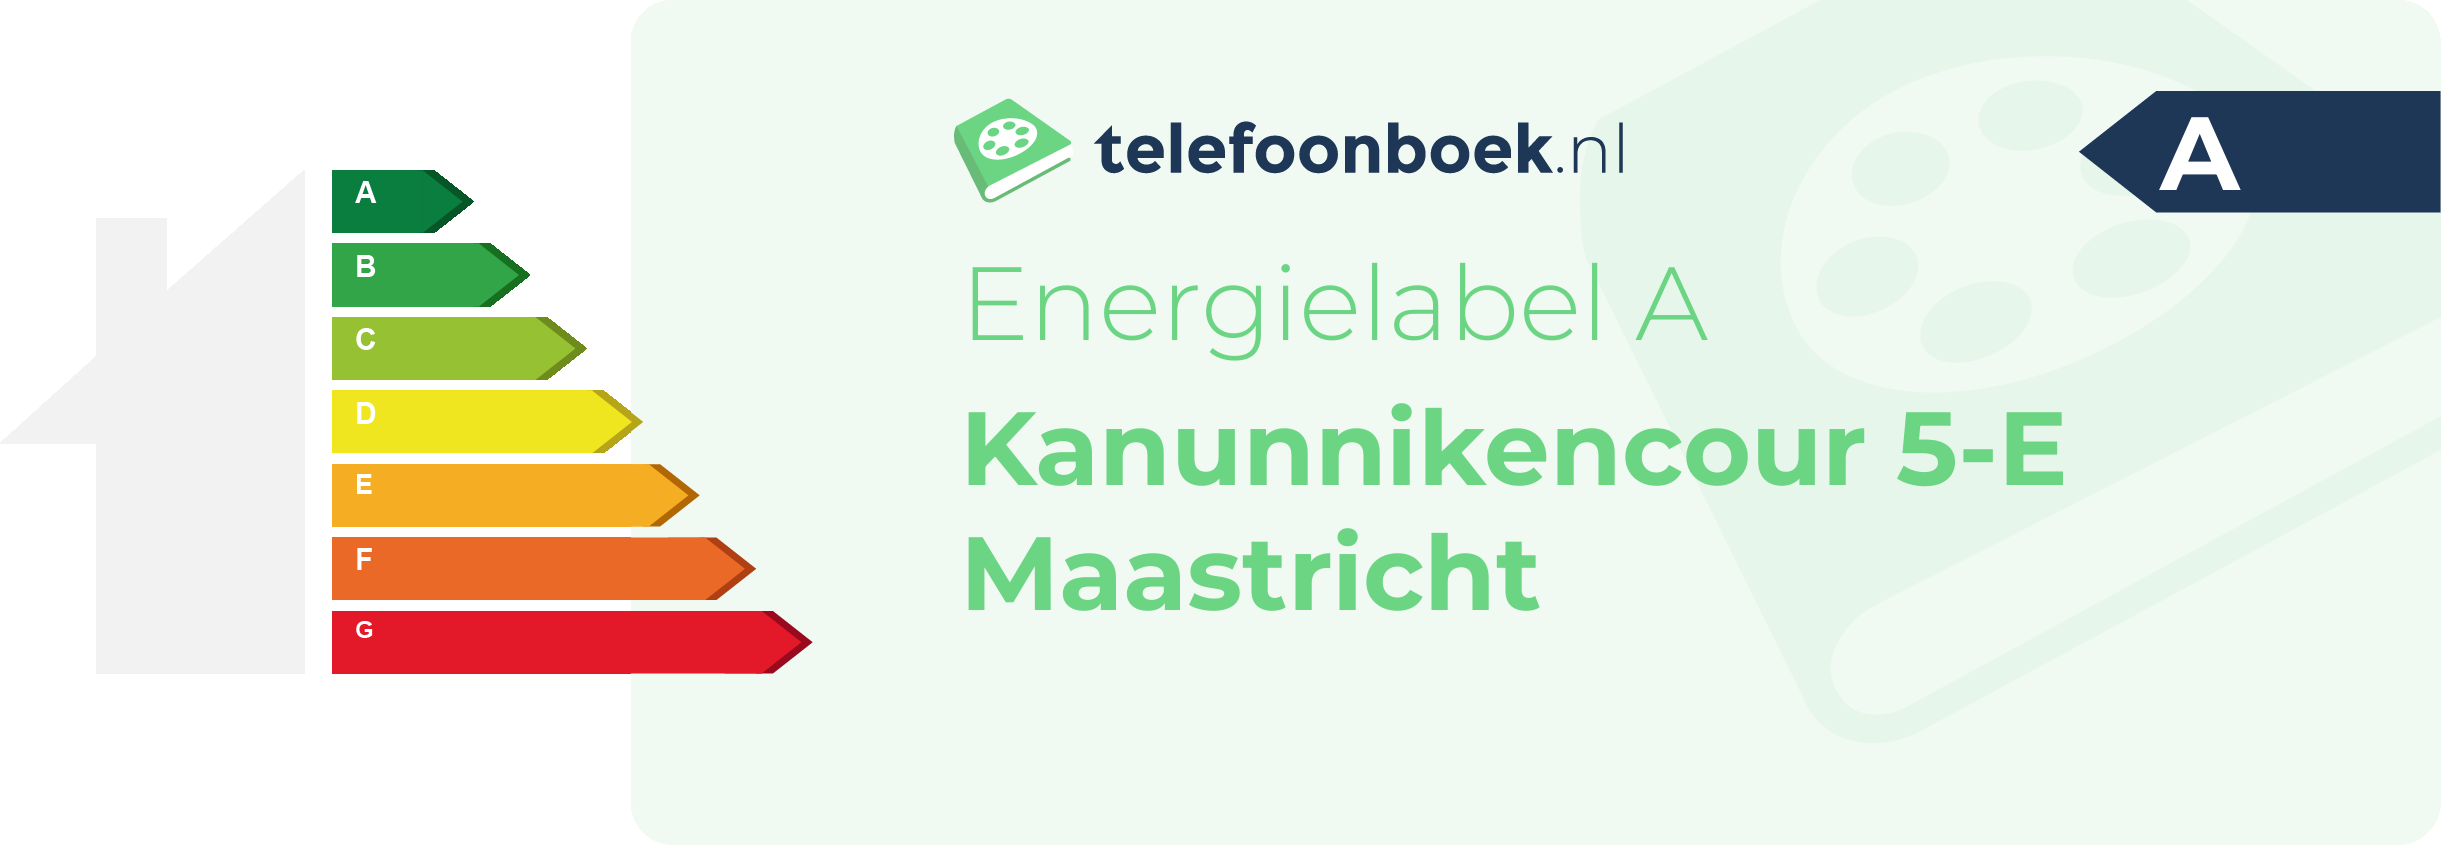 Energielabel Kanunnikencour 5-E Maastricht